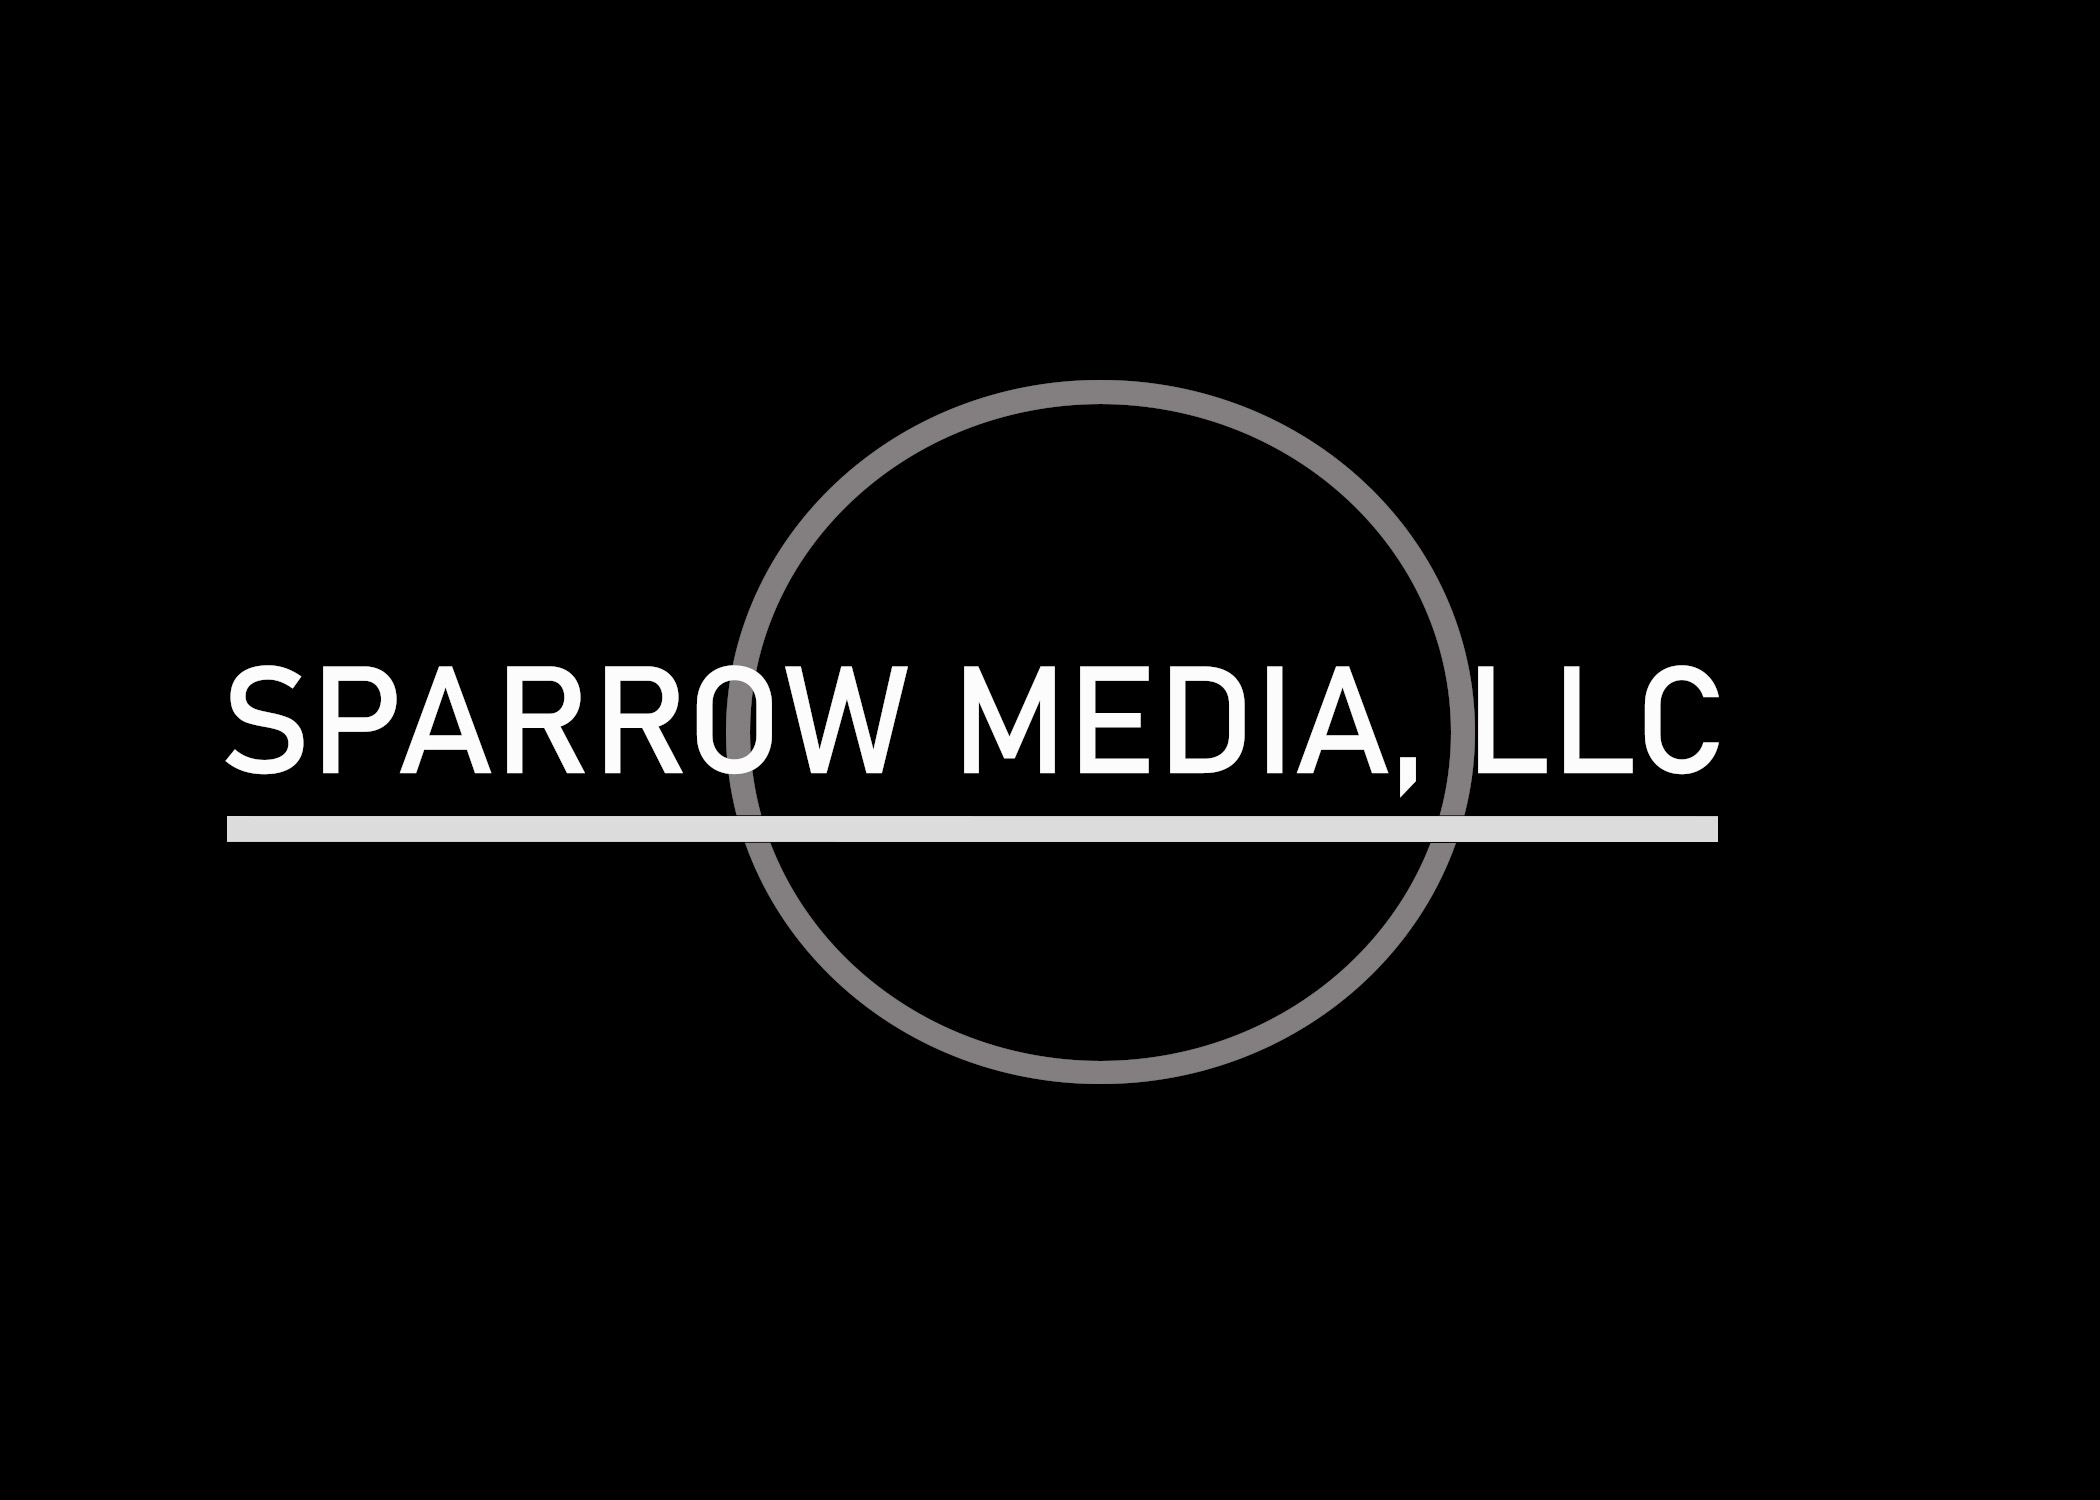 Sparrow Media, LLC